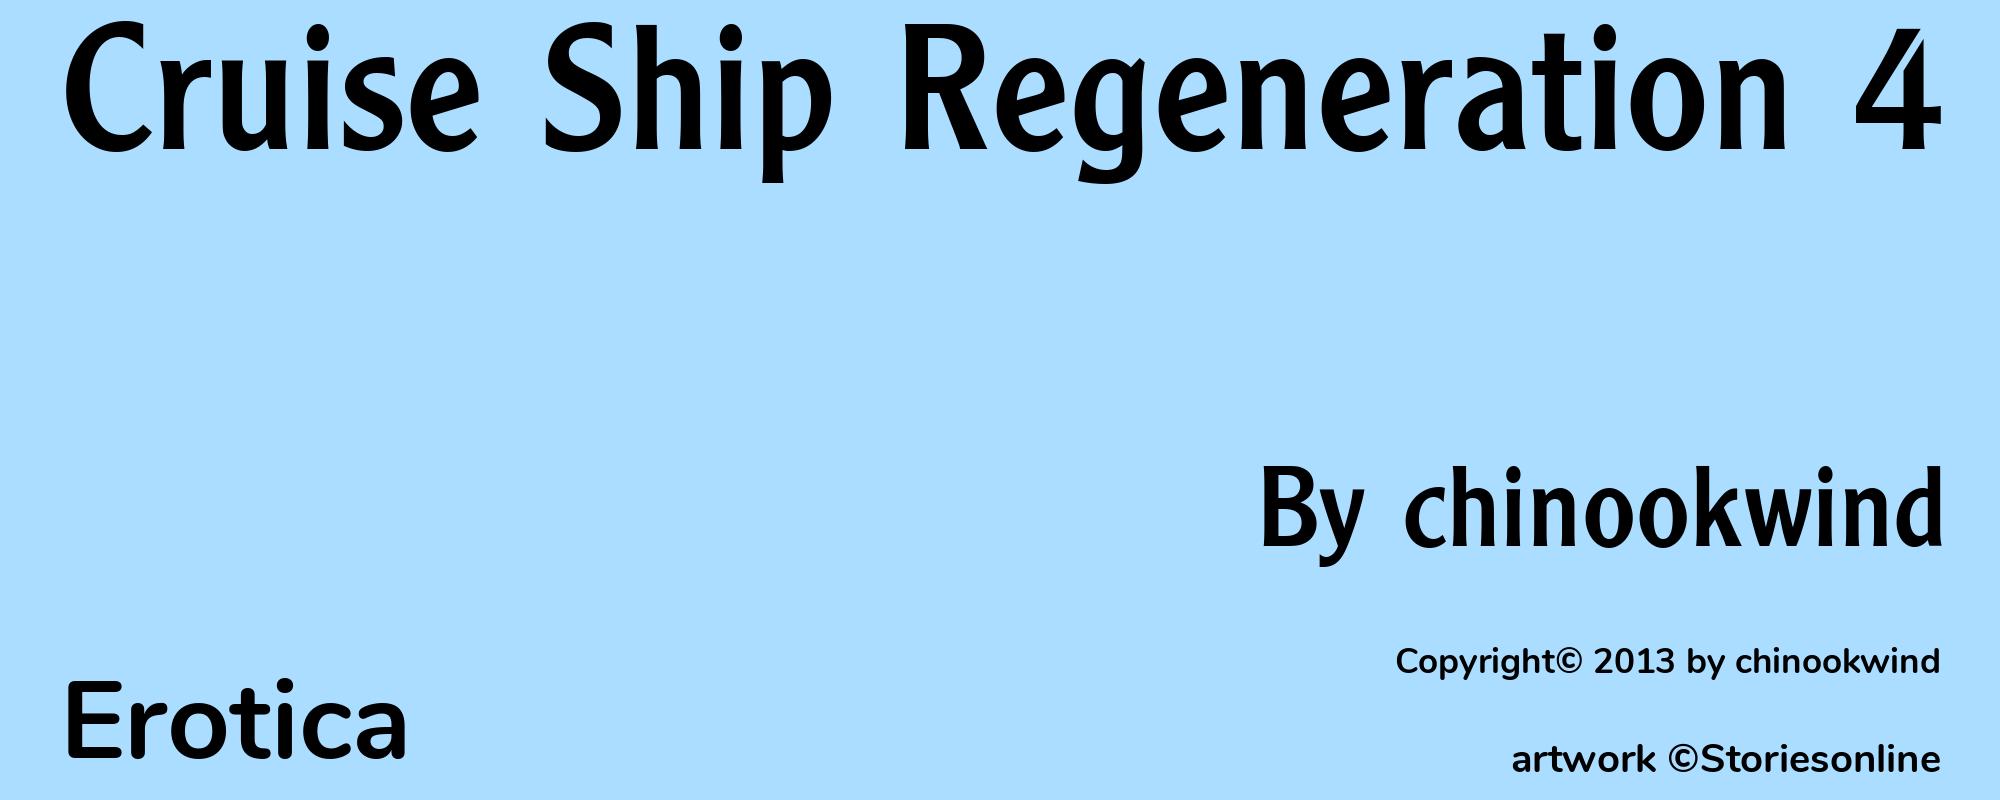 Cruise Ship Regeneration 4 - Cover